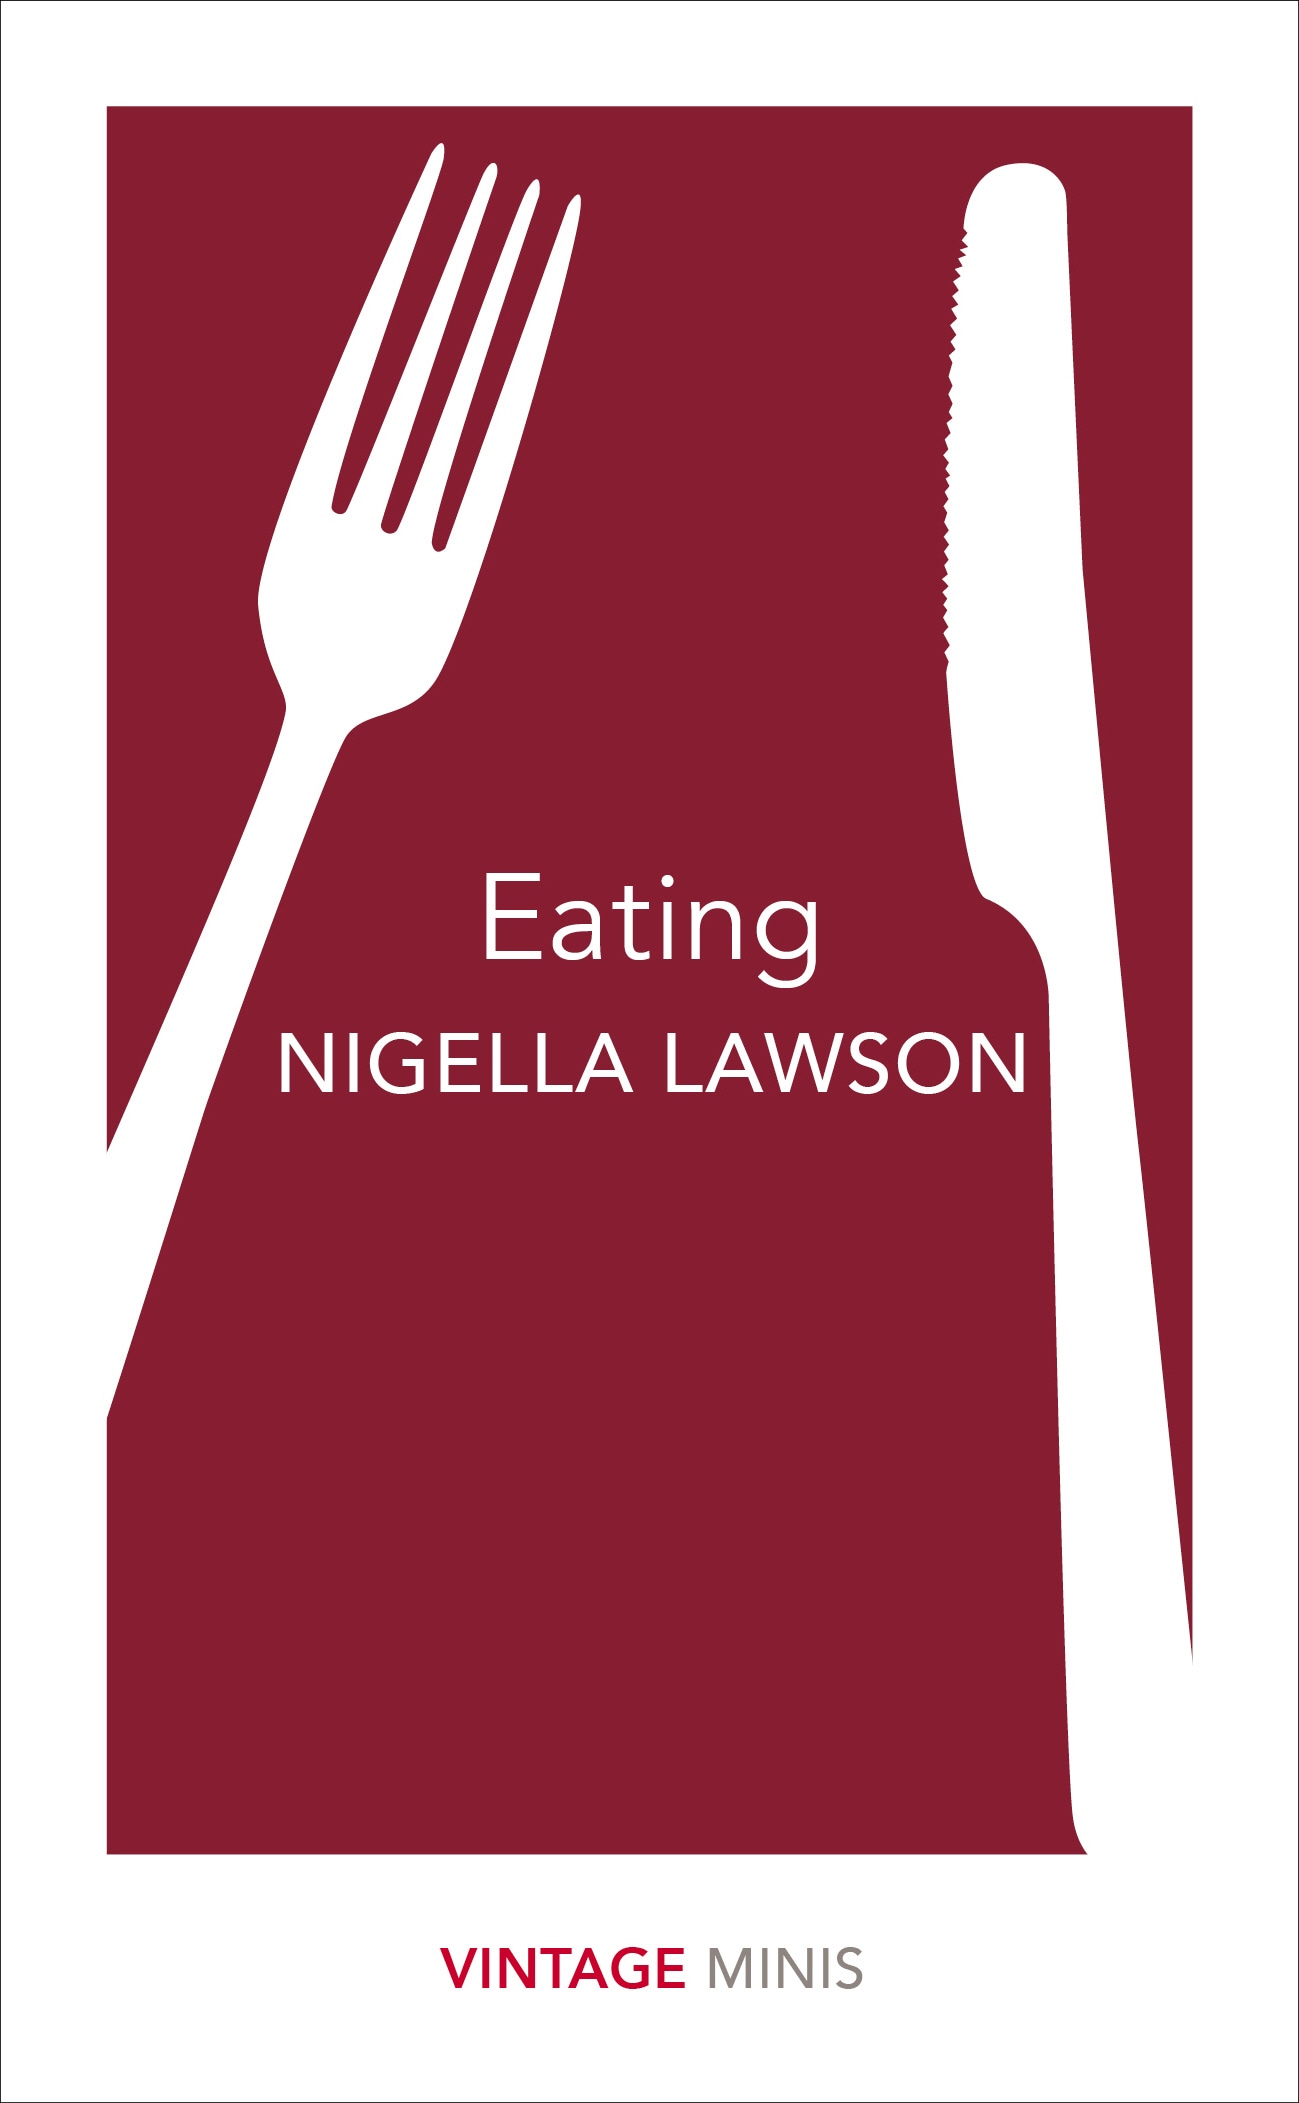 Book “Eating” by Nigella Lawson — June 8, 2017